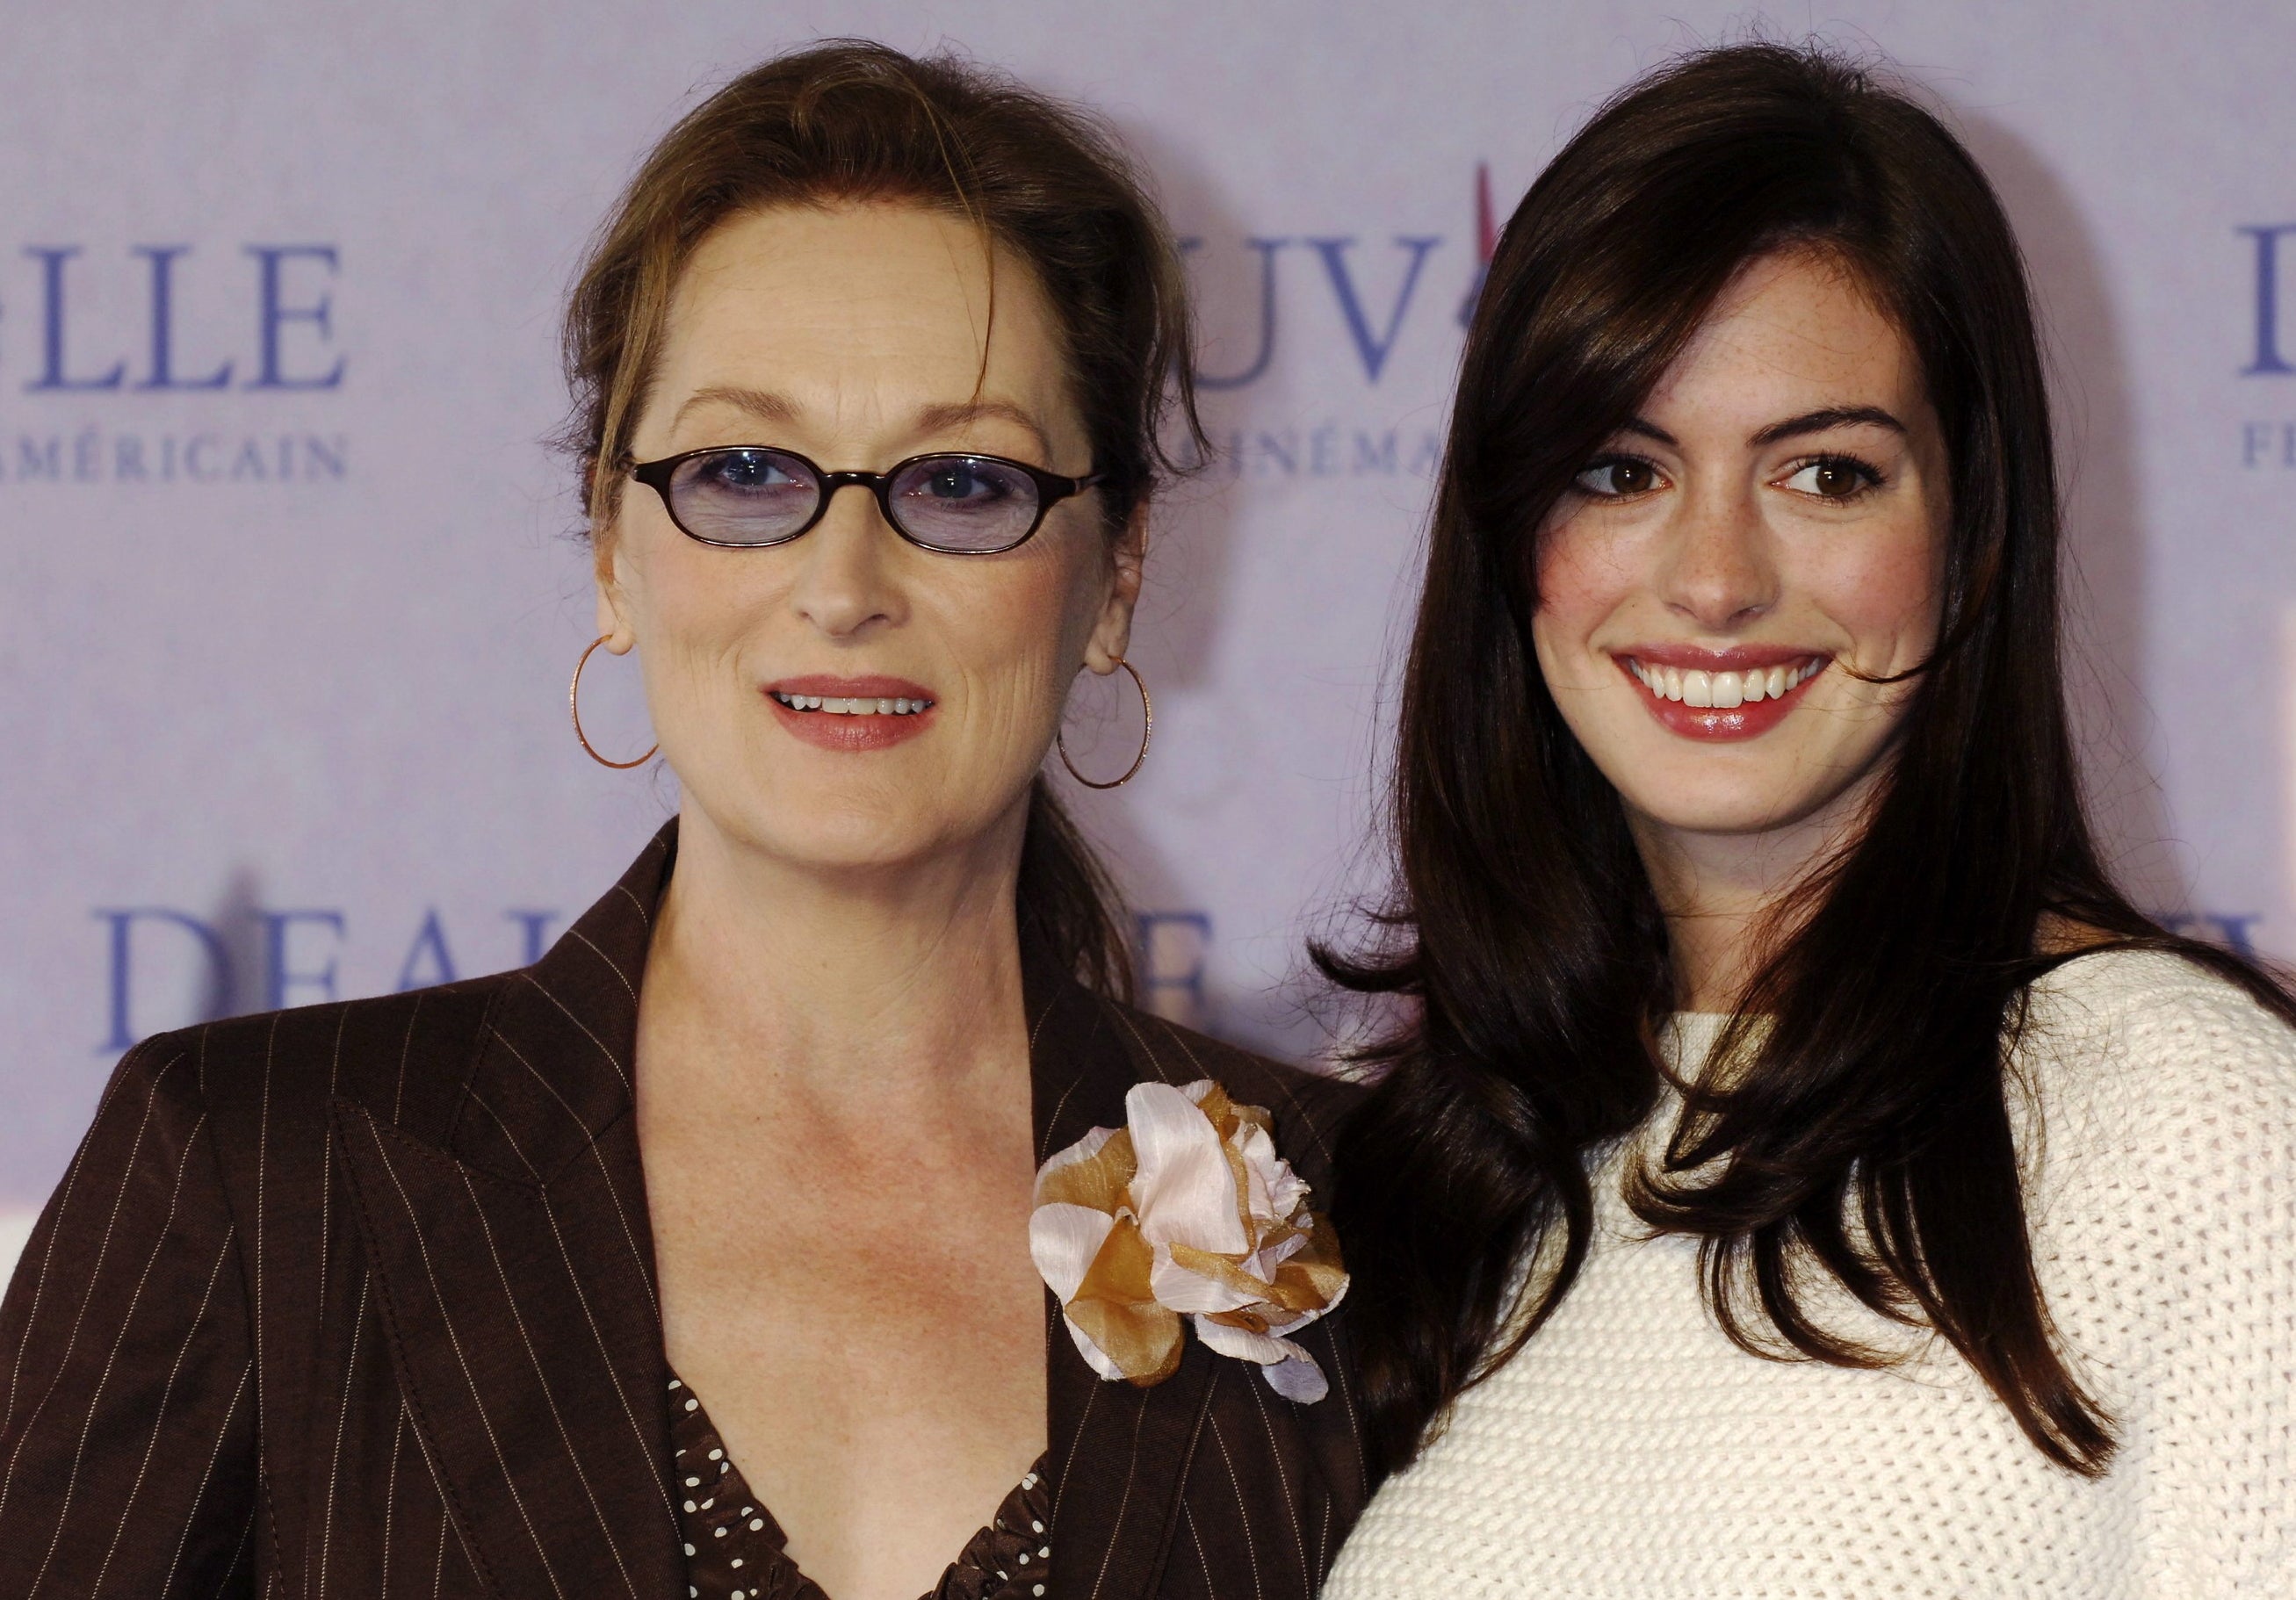 Anne poses with co-star Meryl Streep